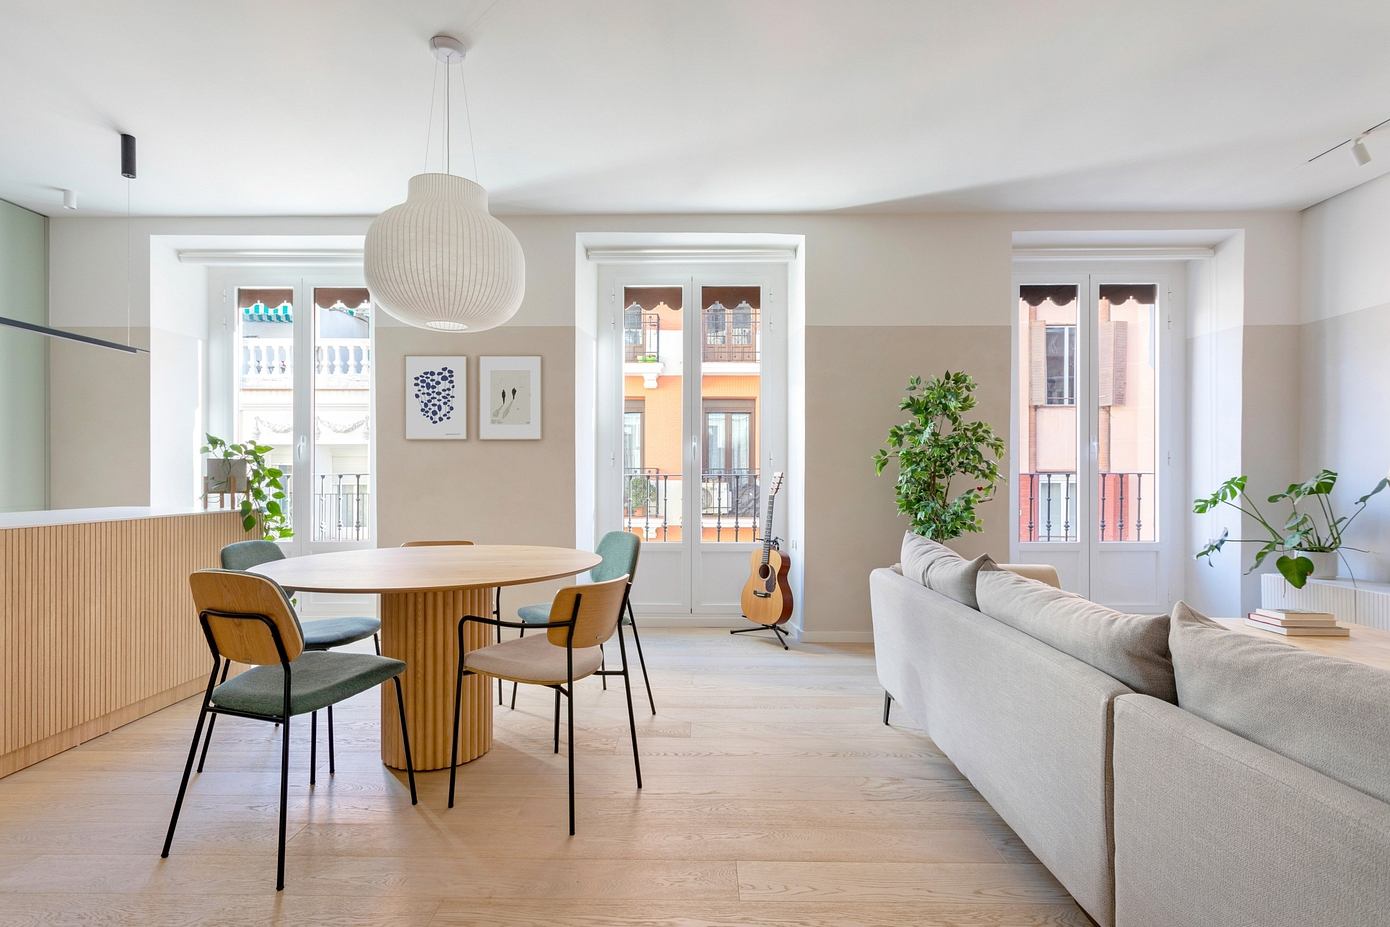 Quesada Apartment: StudioMadera’s Approach to Textured, Warm Interiors